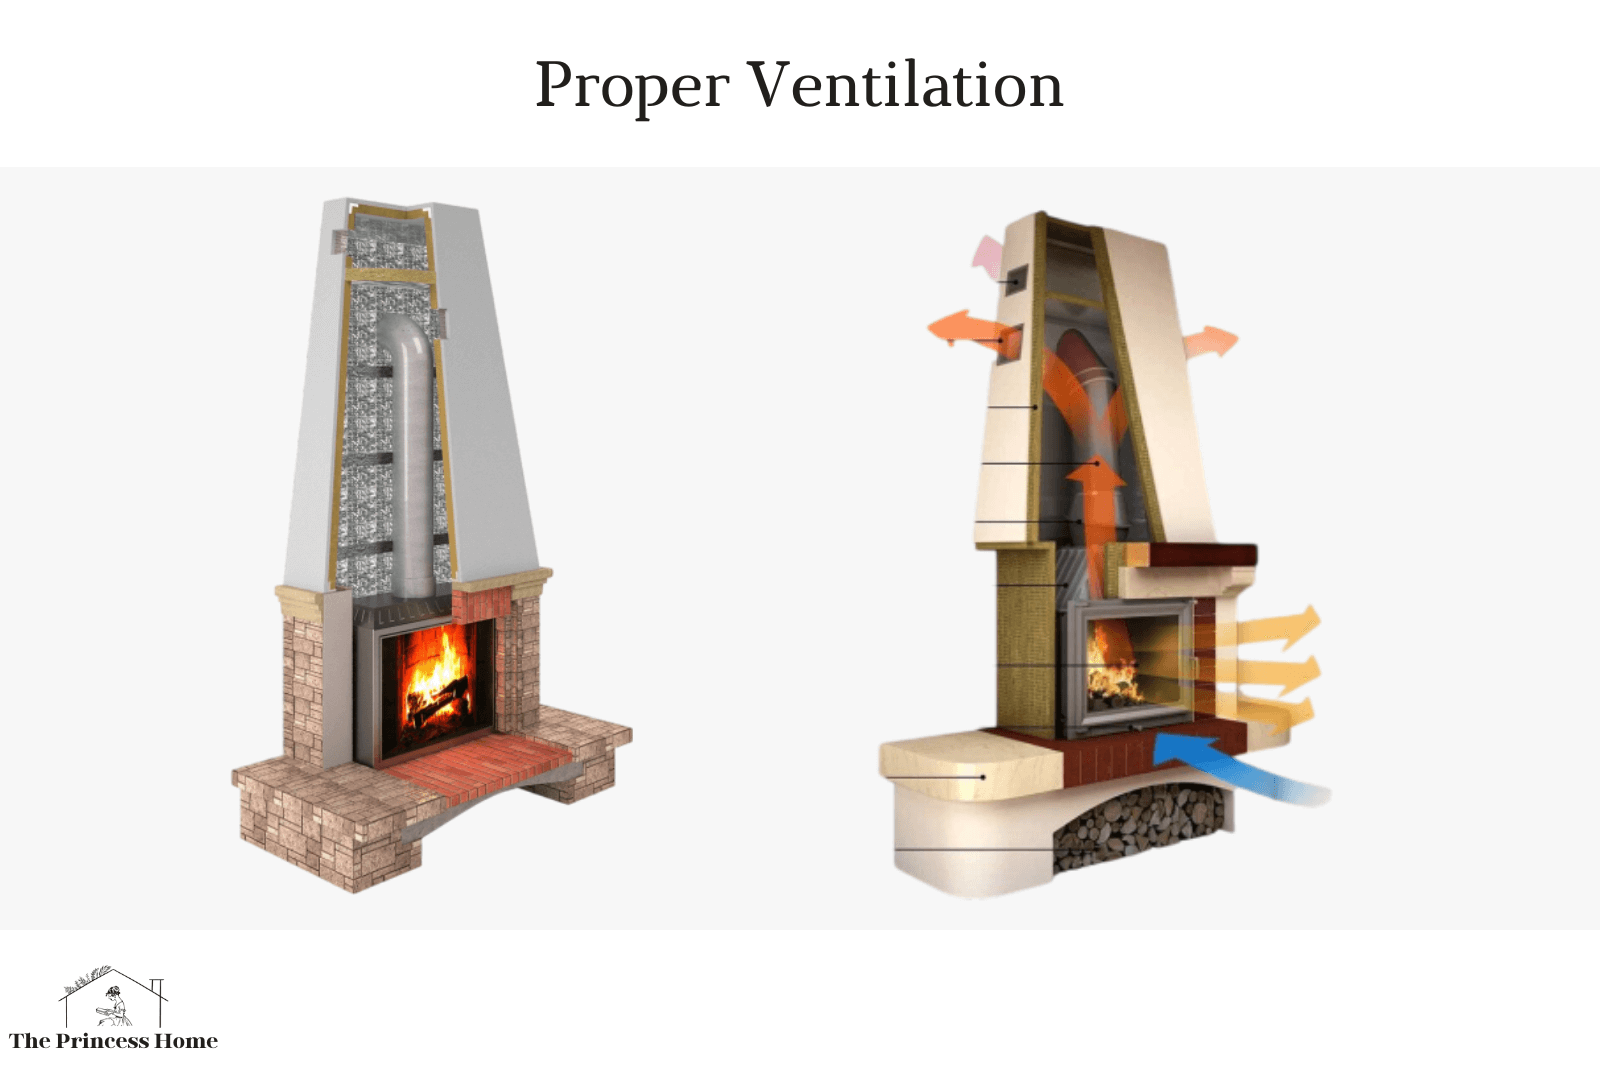 3.Proper Ventilation